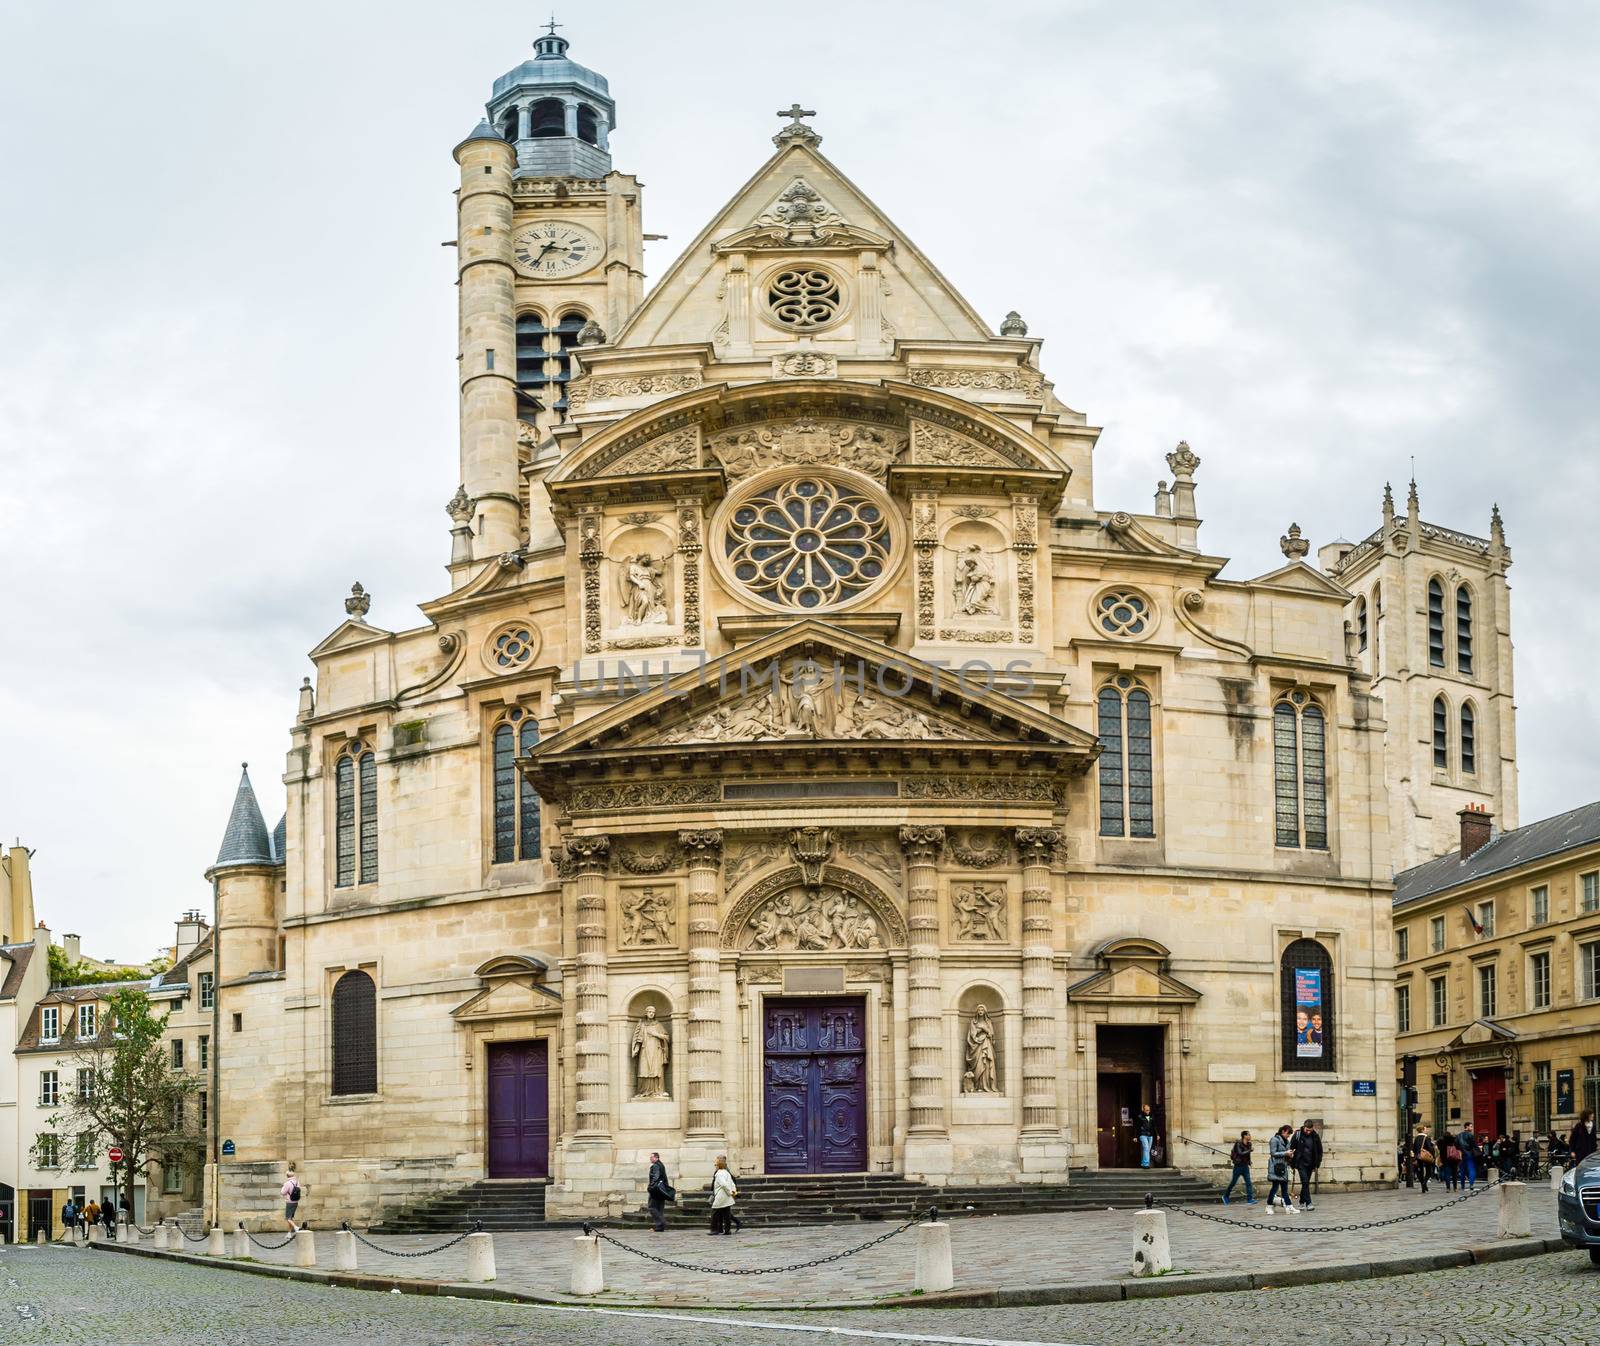 Saint-Etienne-du-Mont church in Paris on montagne sainte-genevieve